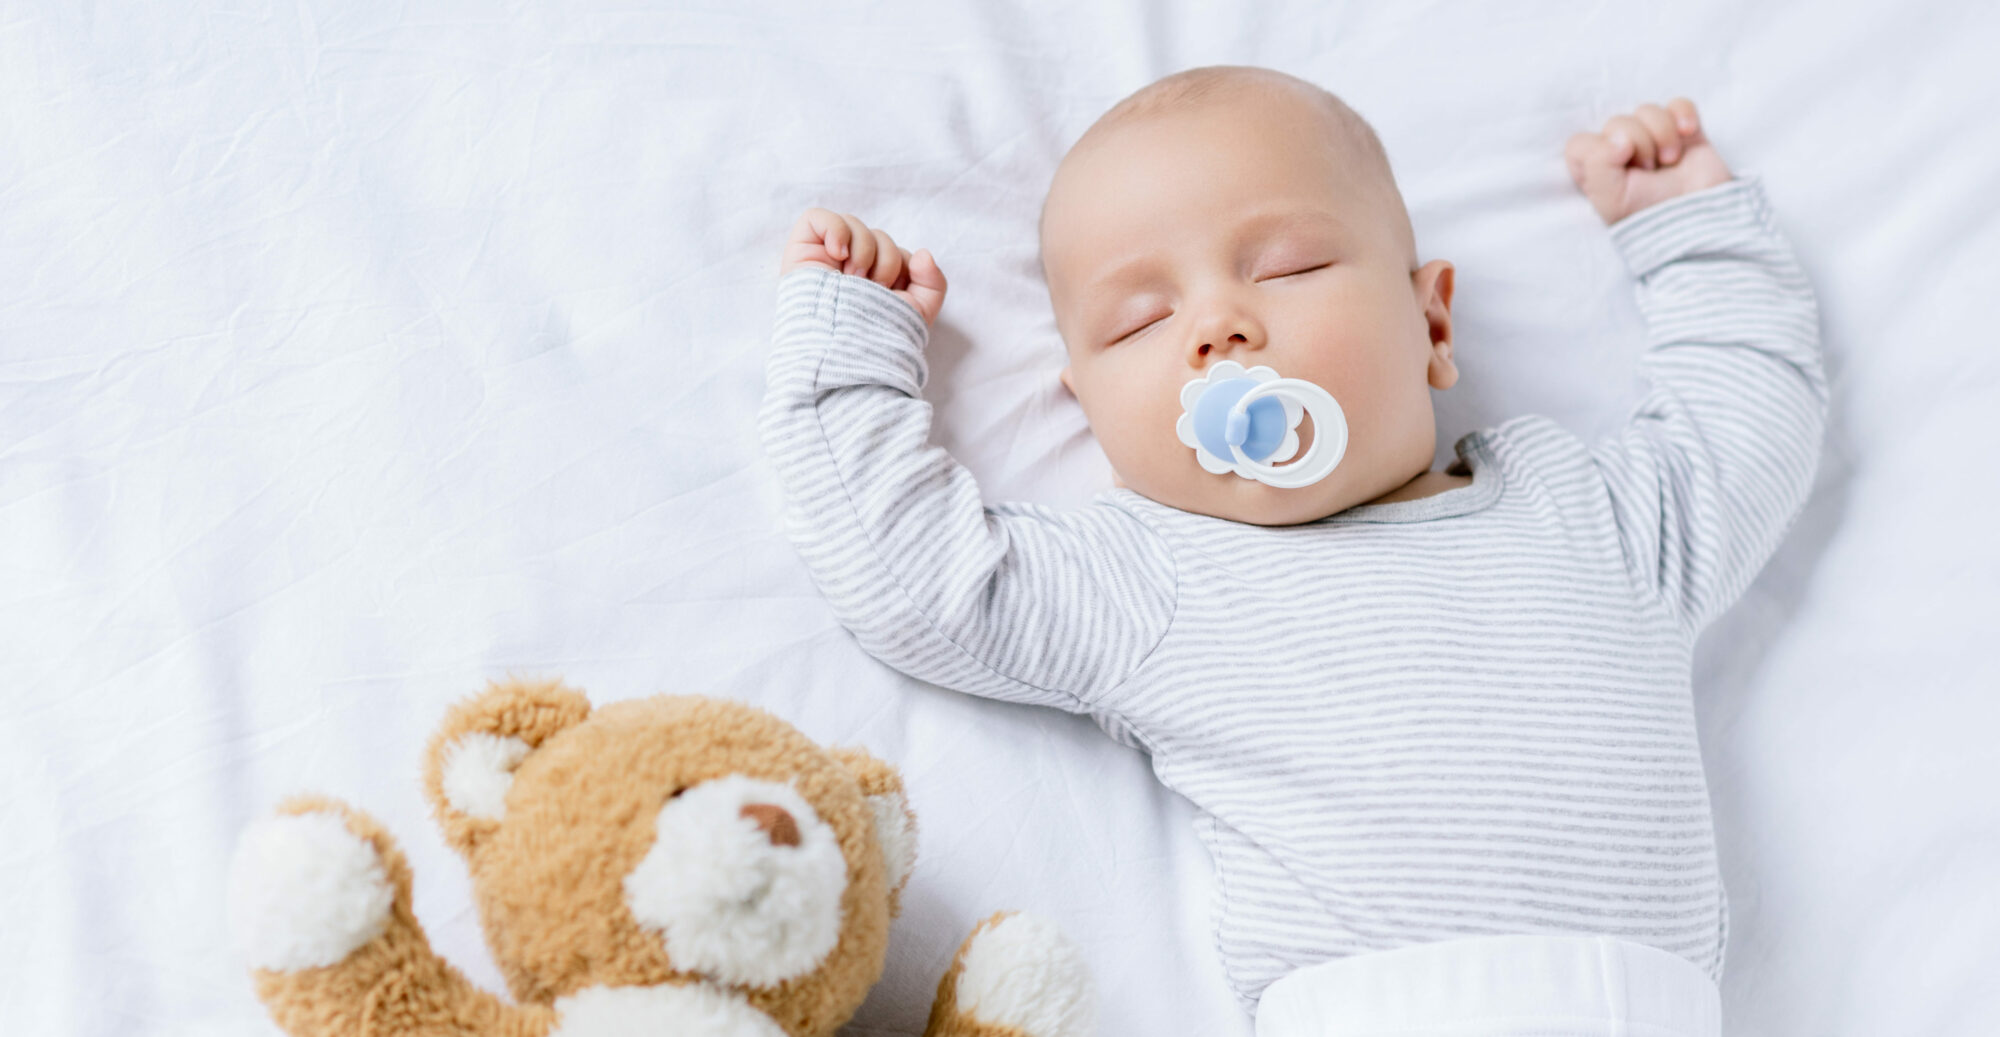 5 gentle ways to improve your child’s sleep